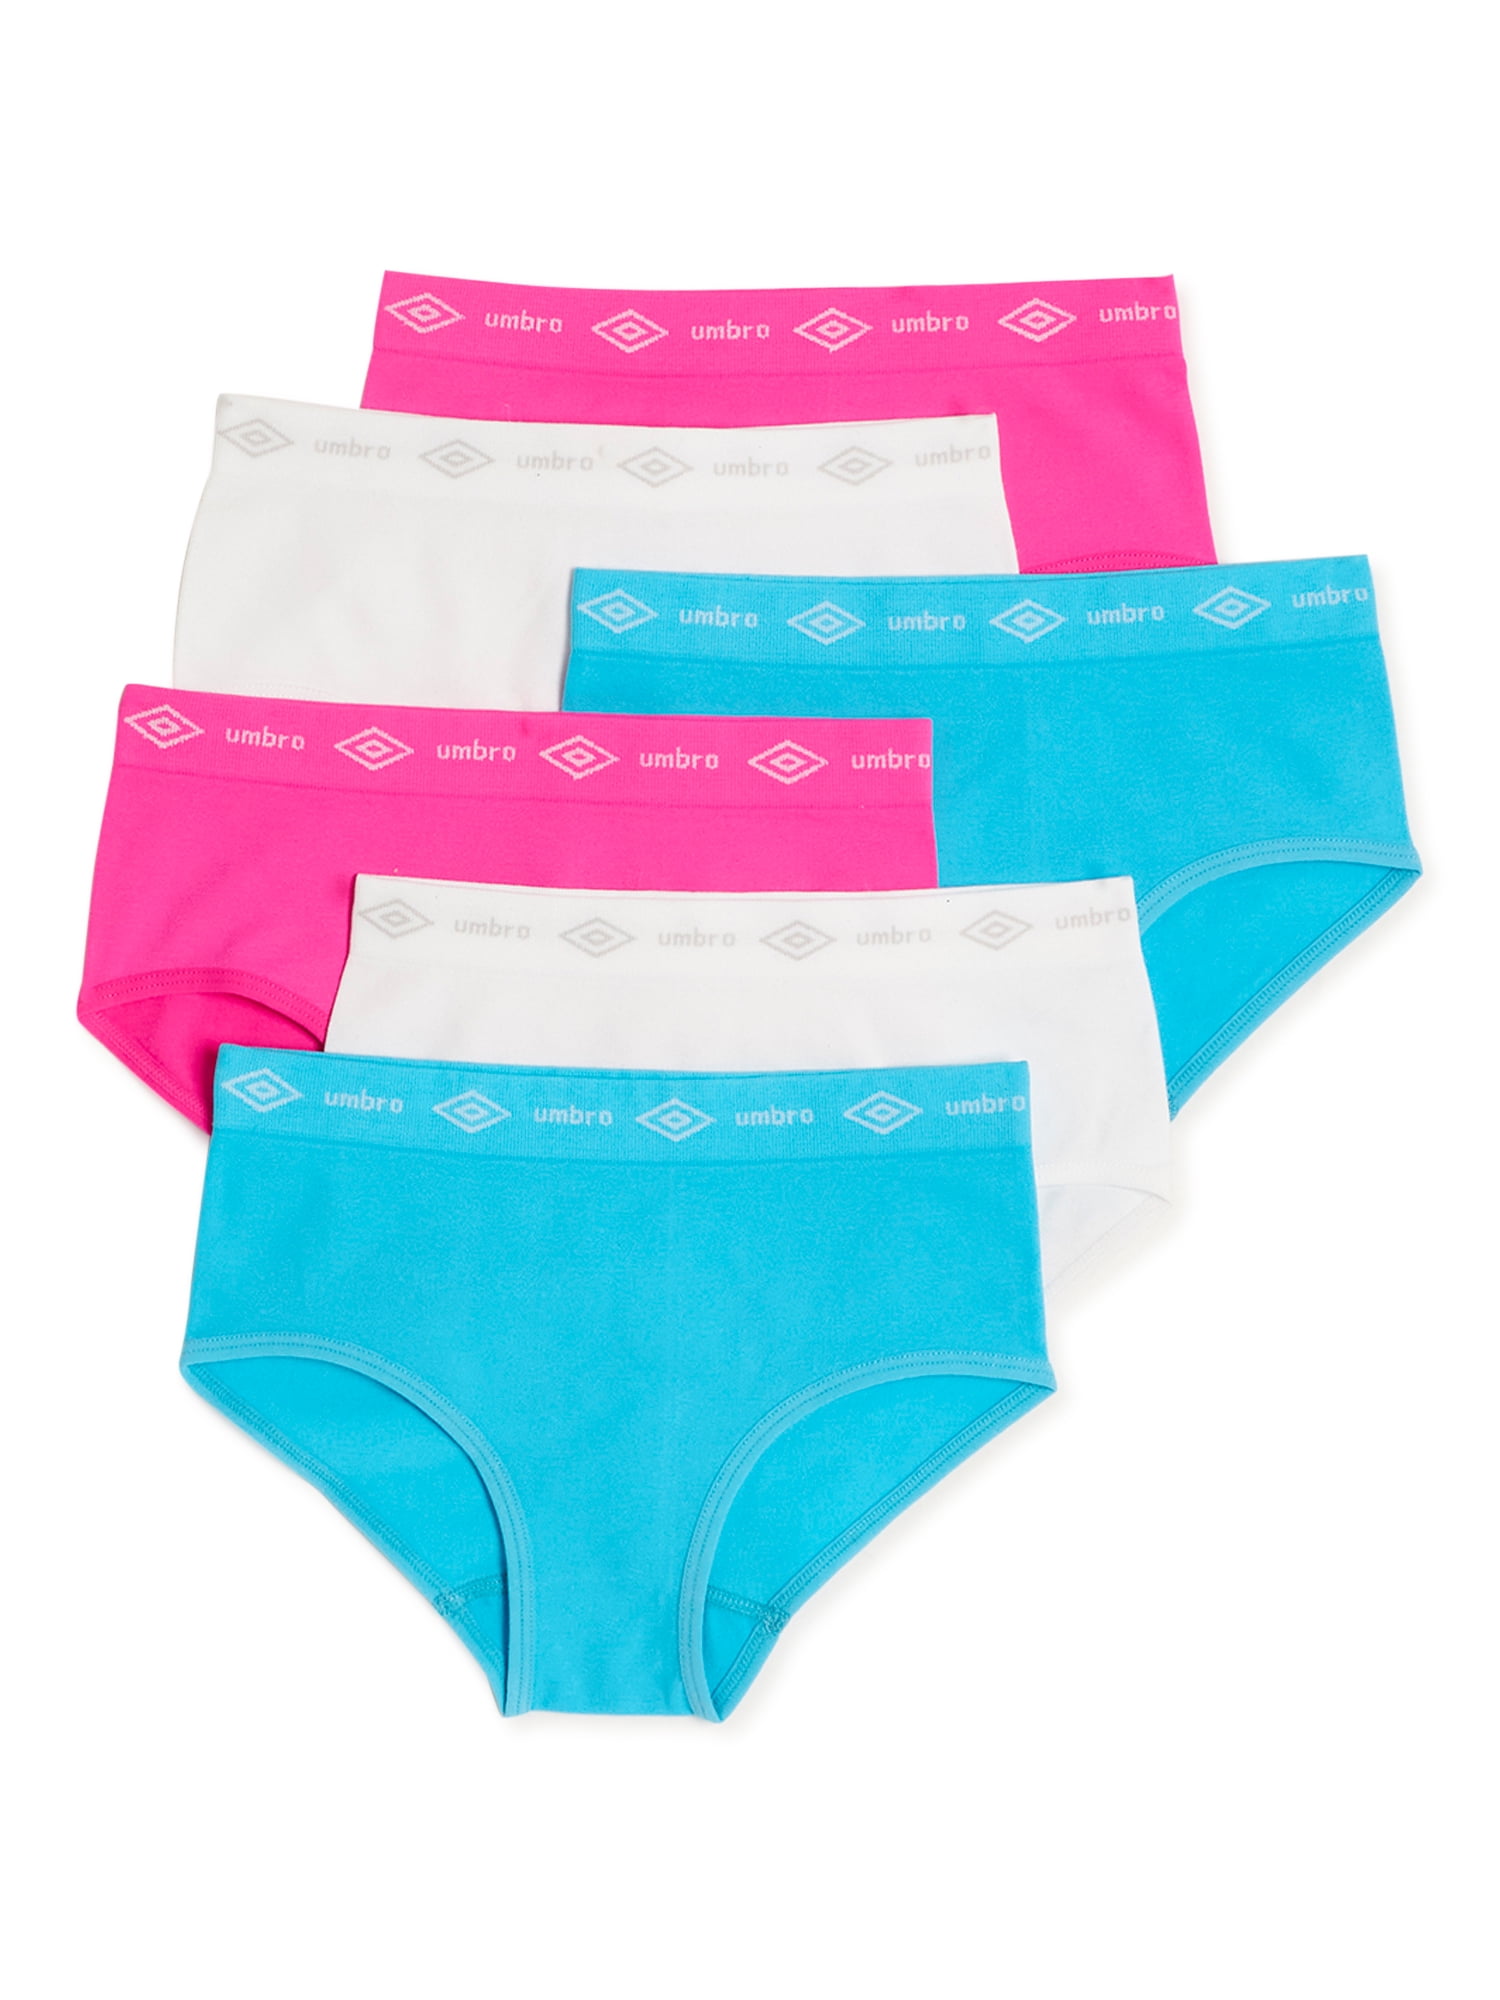 Mua Reebok Girls' Underwear - Seamless Boyshort Panties (5 Pack